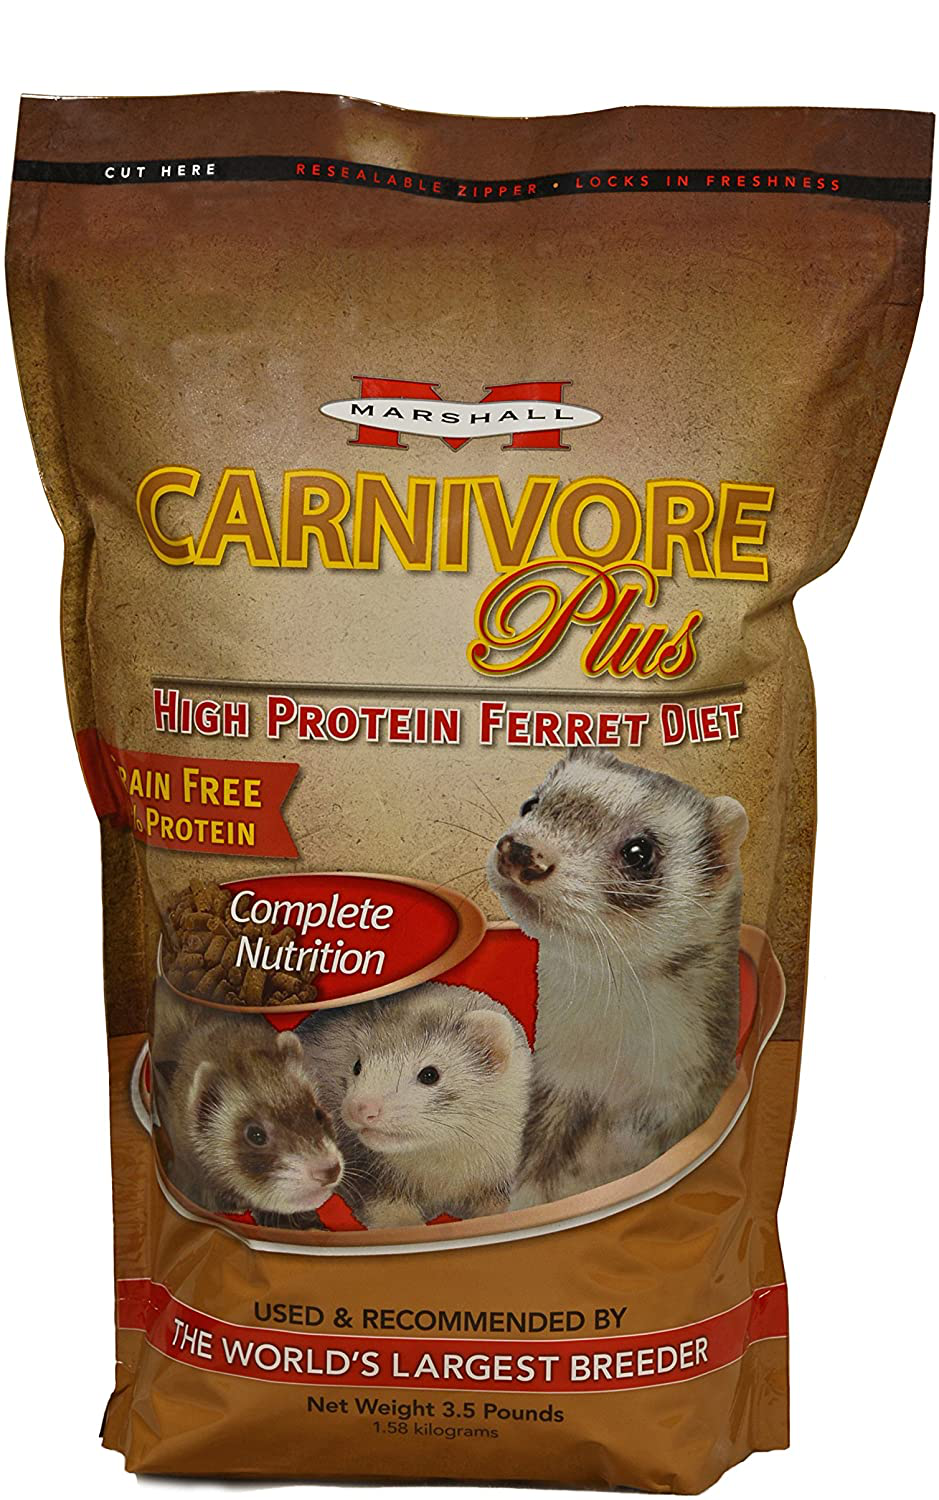 Marshall Carnivore plus High Protein Diet Ferret Food - 3.5 Lb